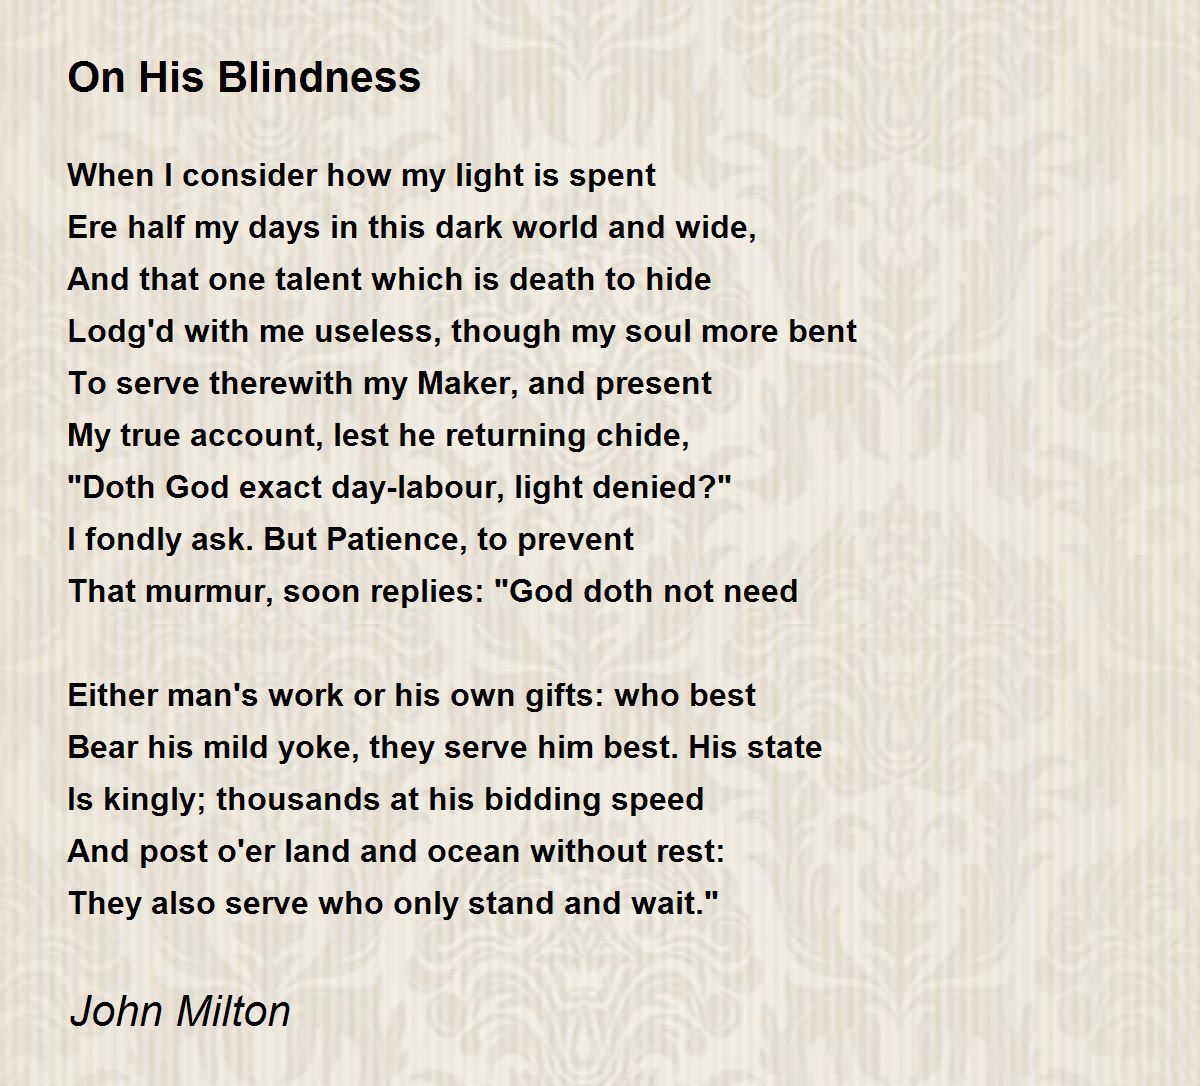 on his blindness poem summary